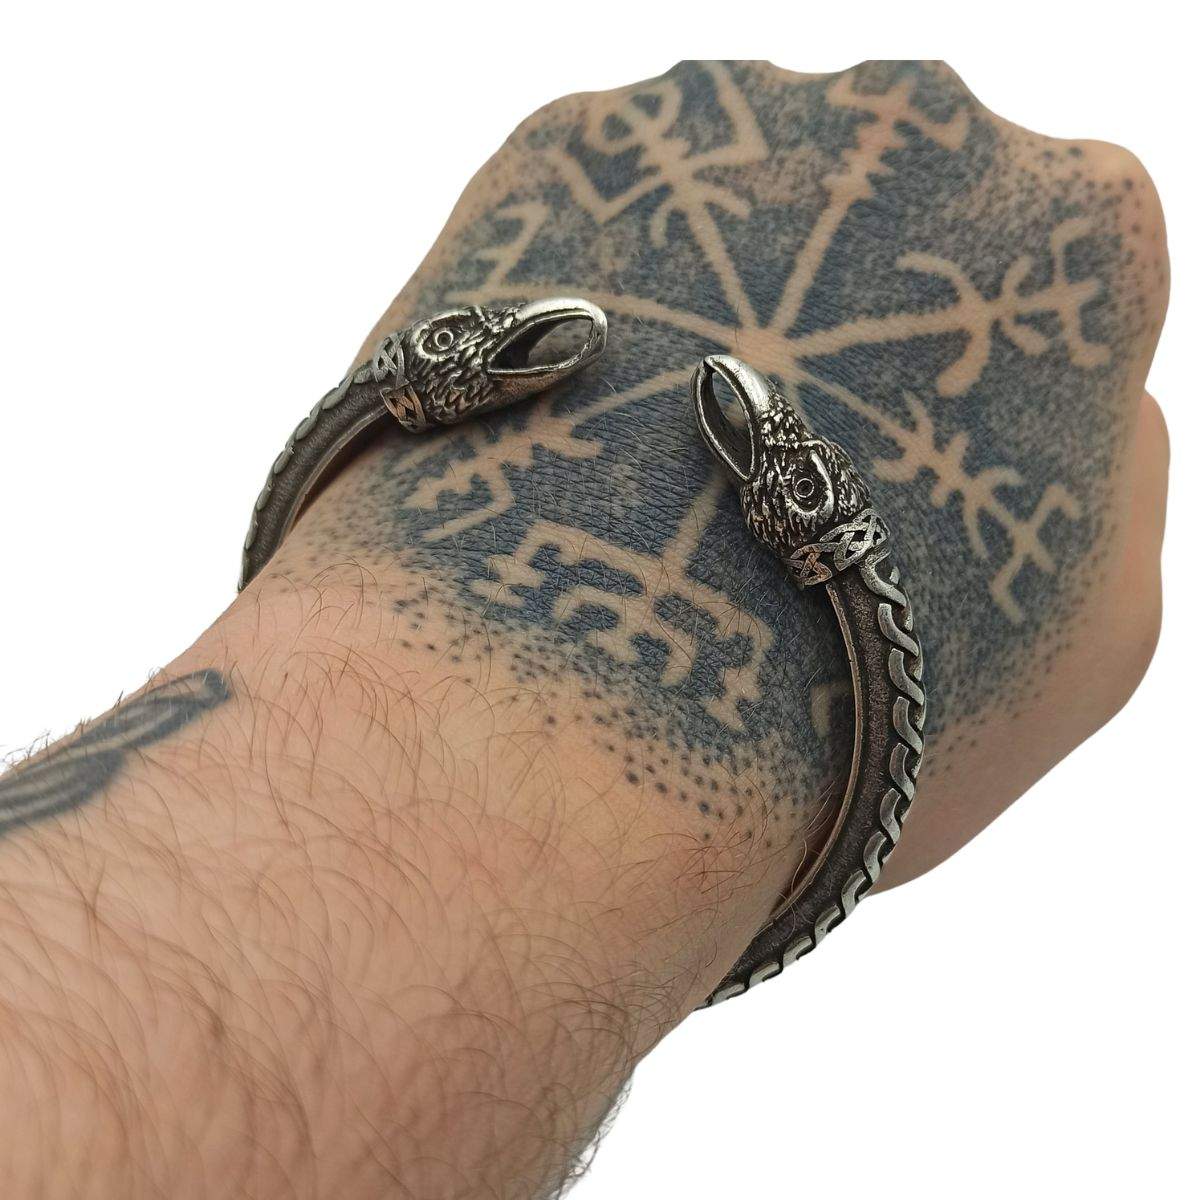 Unique Viking Armband Tattoo Design